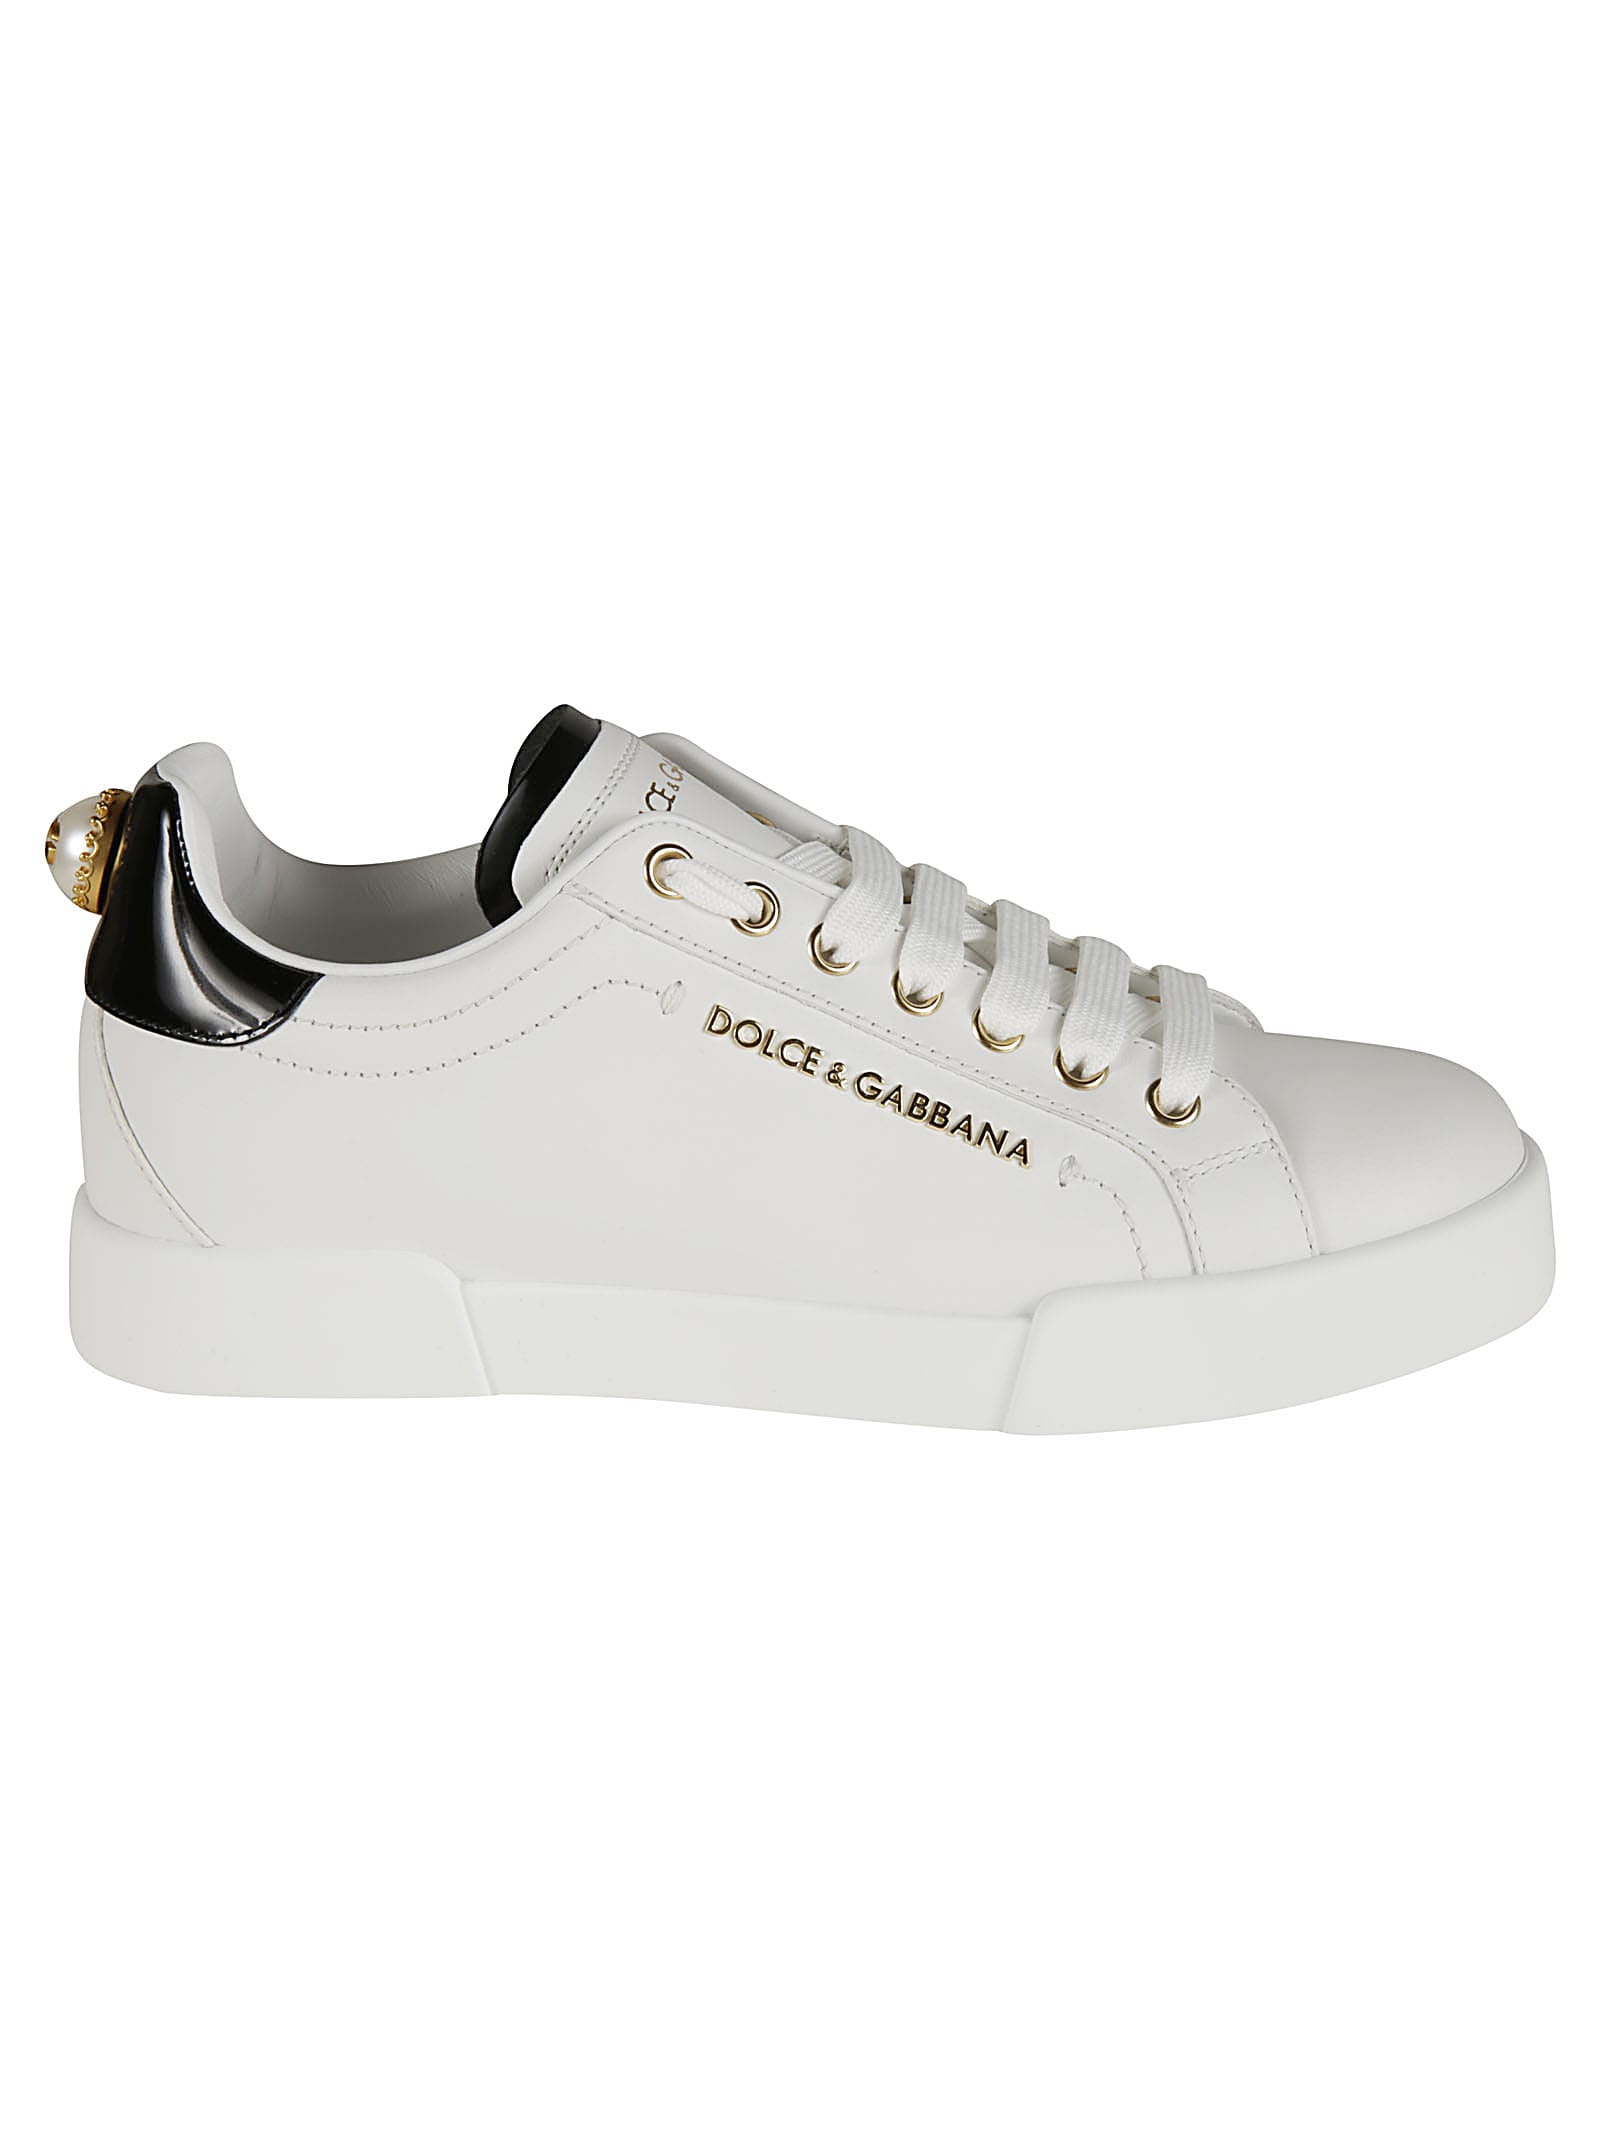 Dolce & Gabbana Logo Plaque Embellished Sneakers